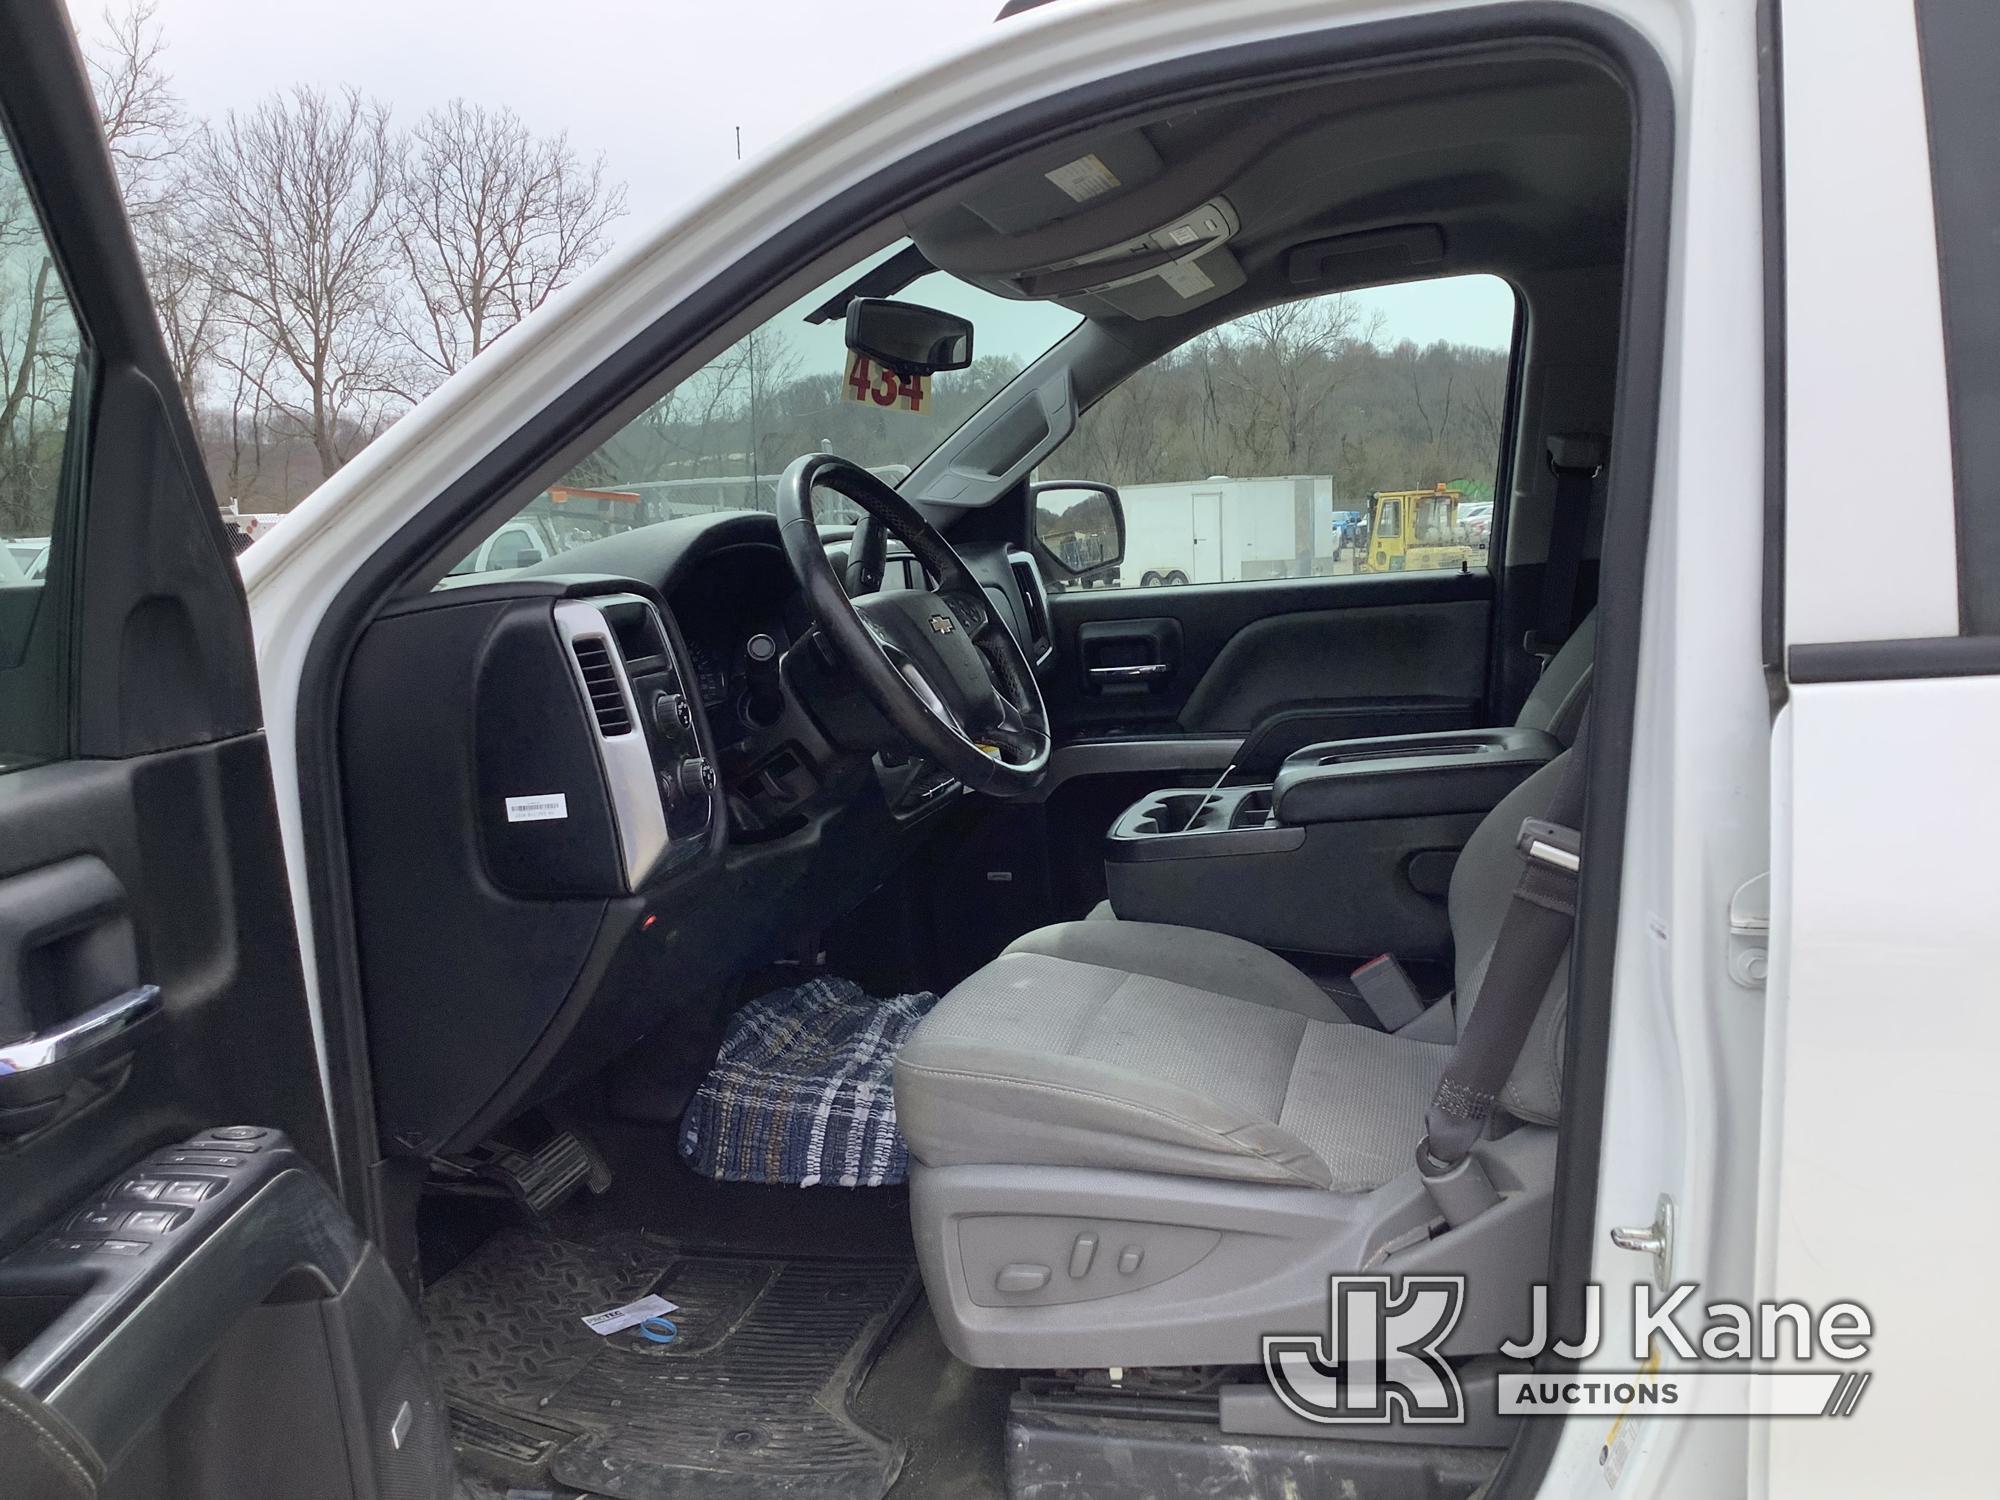 (Smock, PA) 2017 Chevrolet Silverado 1500 4x4 Crew-Cab Pickup Truck Runs, Moves Rough, Bad Transmiss